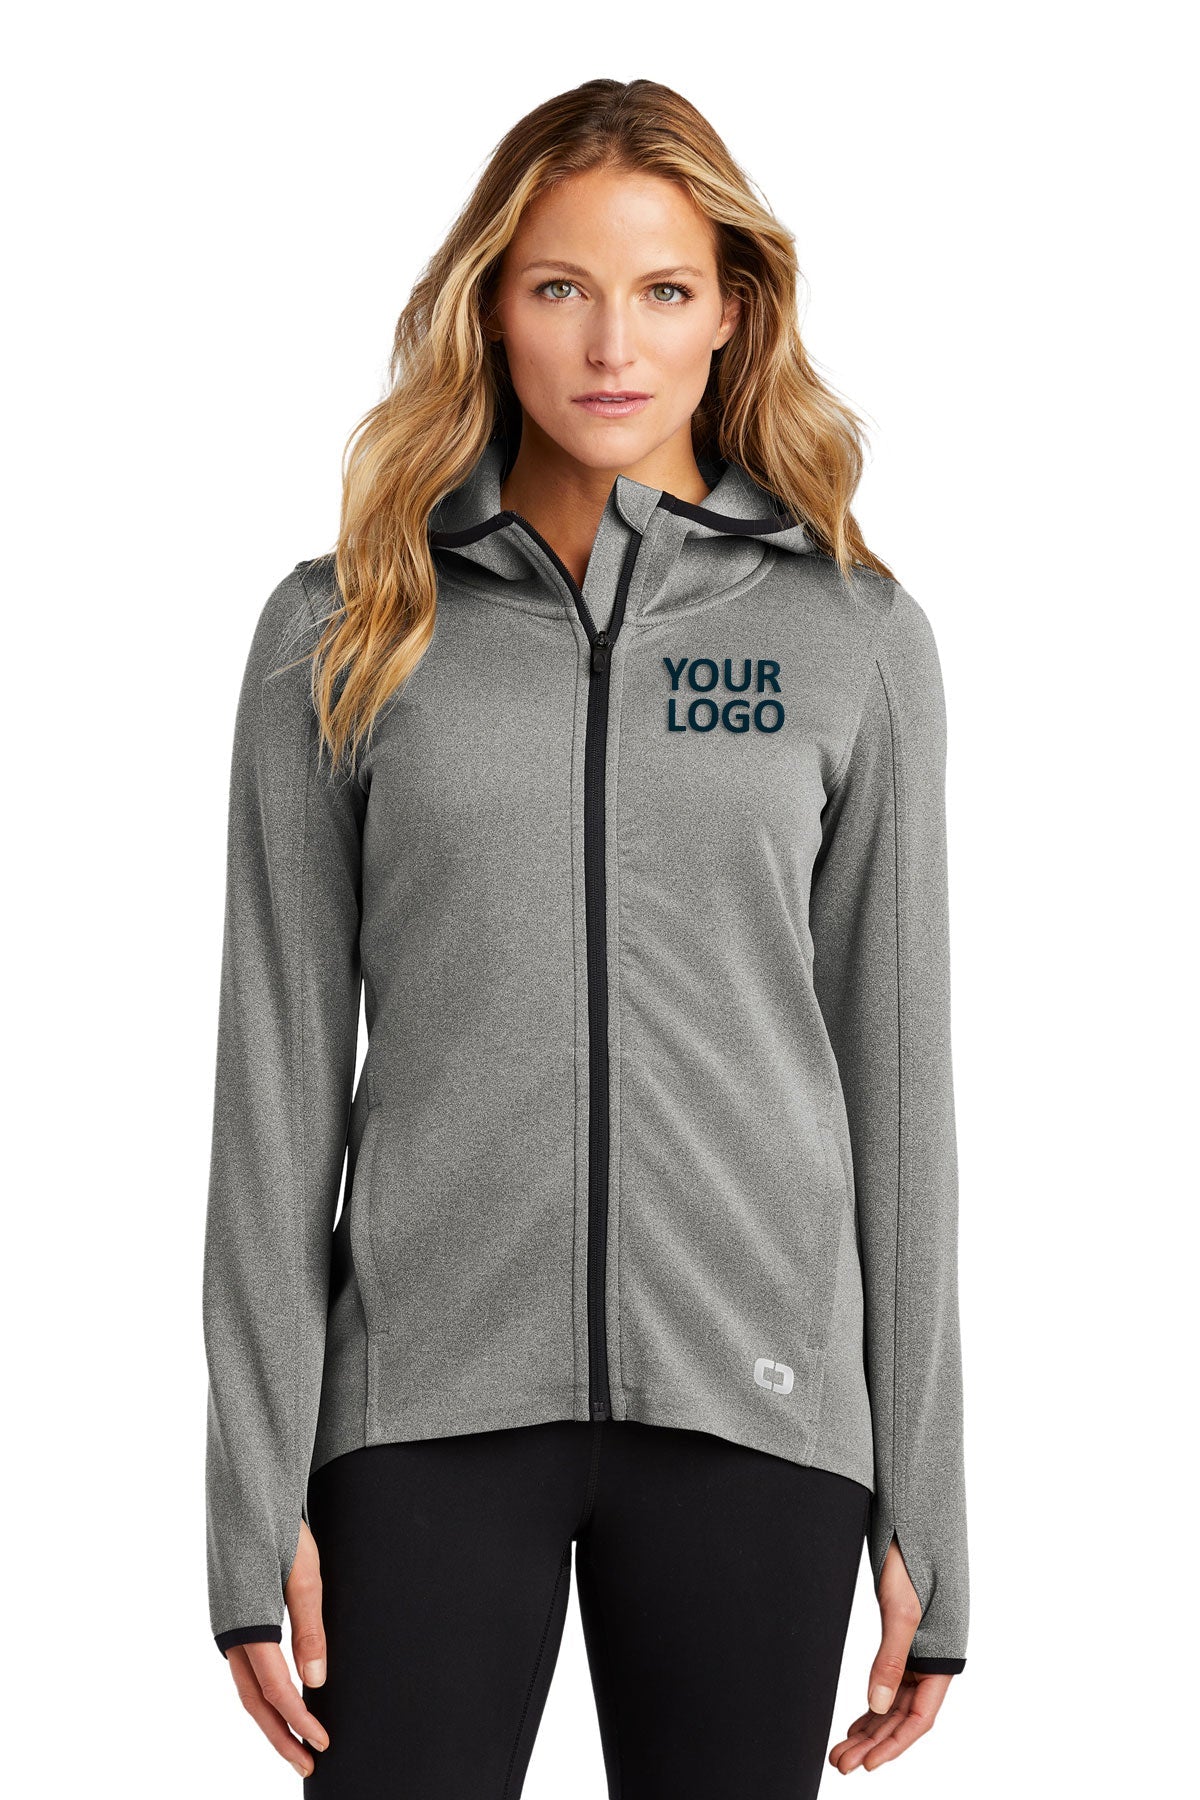 OGIO Endurance Heather Grey LOE728 company embroidered jackets